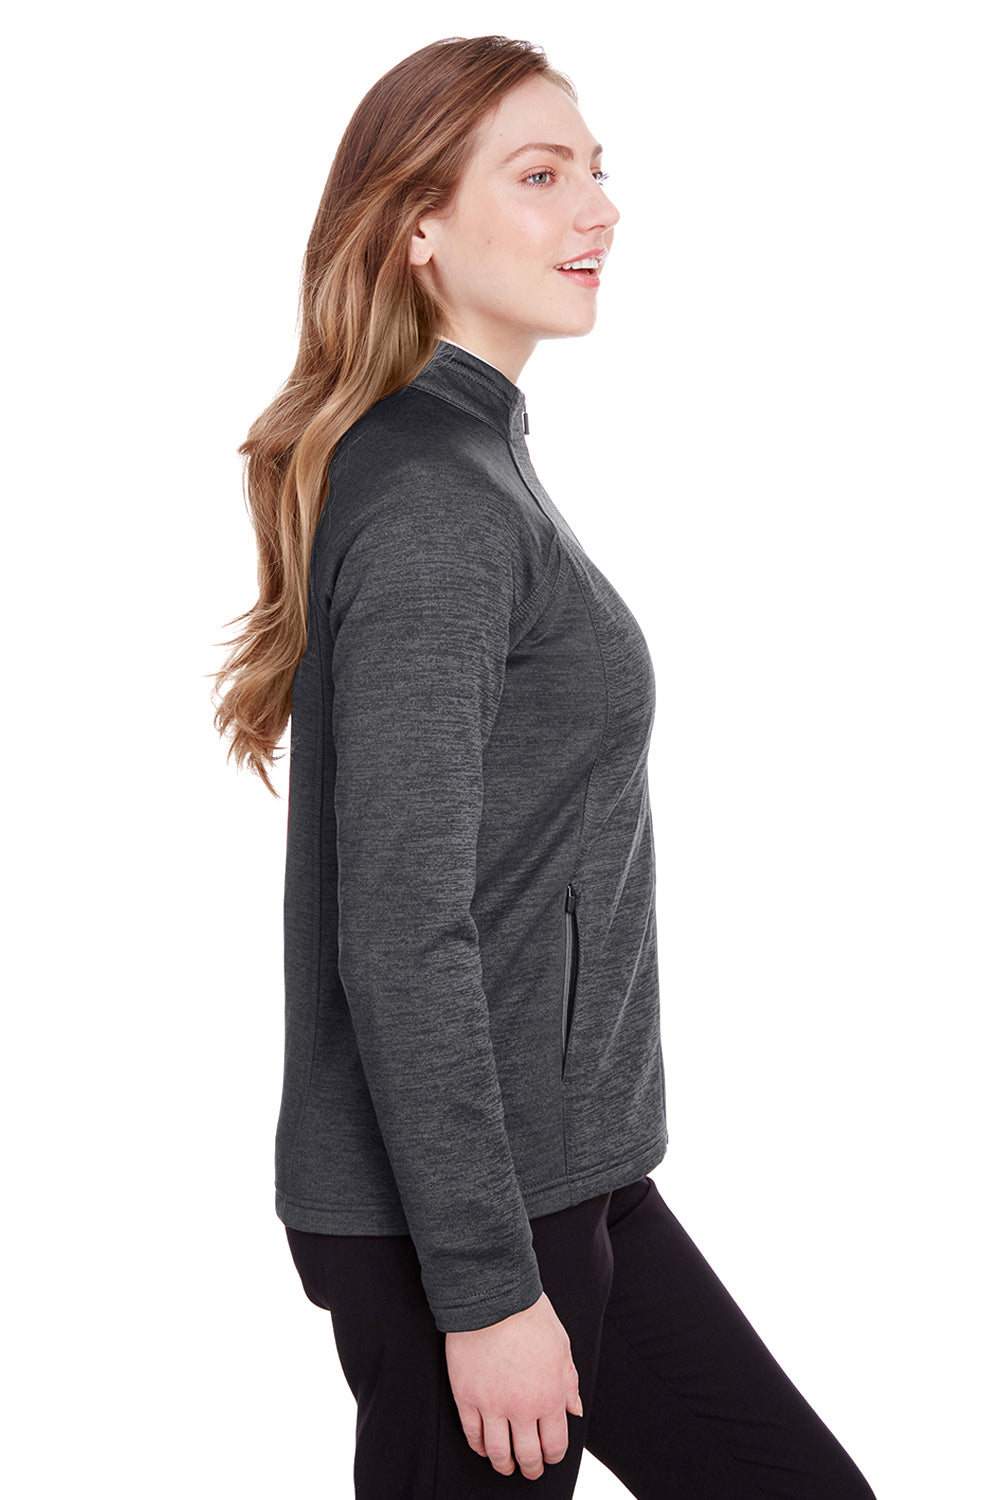 North End NE712W Womens Flux 2.0 Fleece Water Resistant Full Zip Jacket Black/Carbon Grey Side